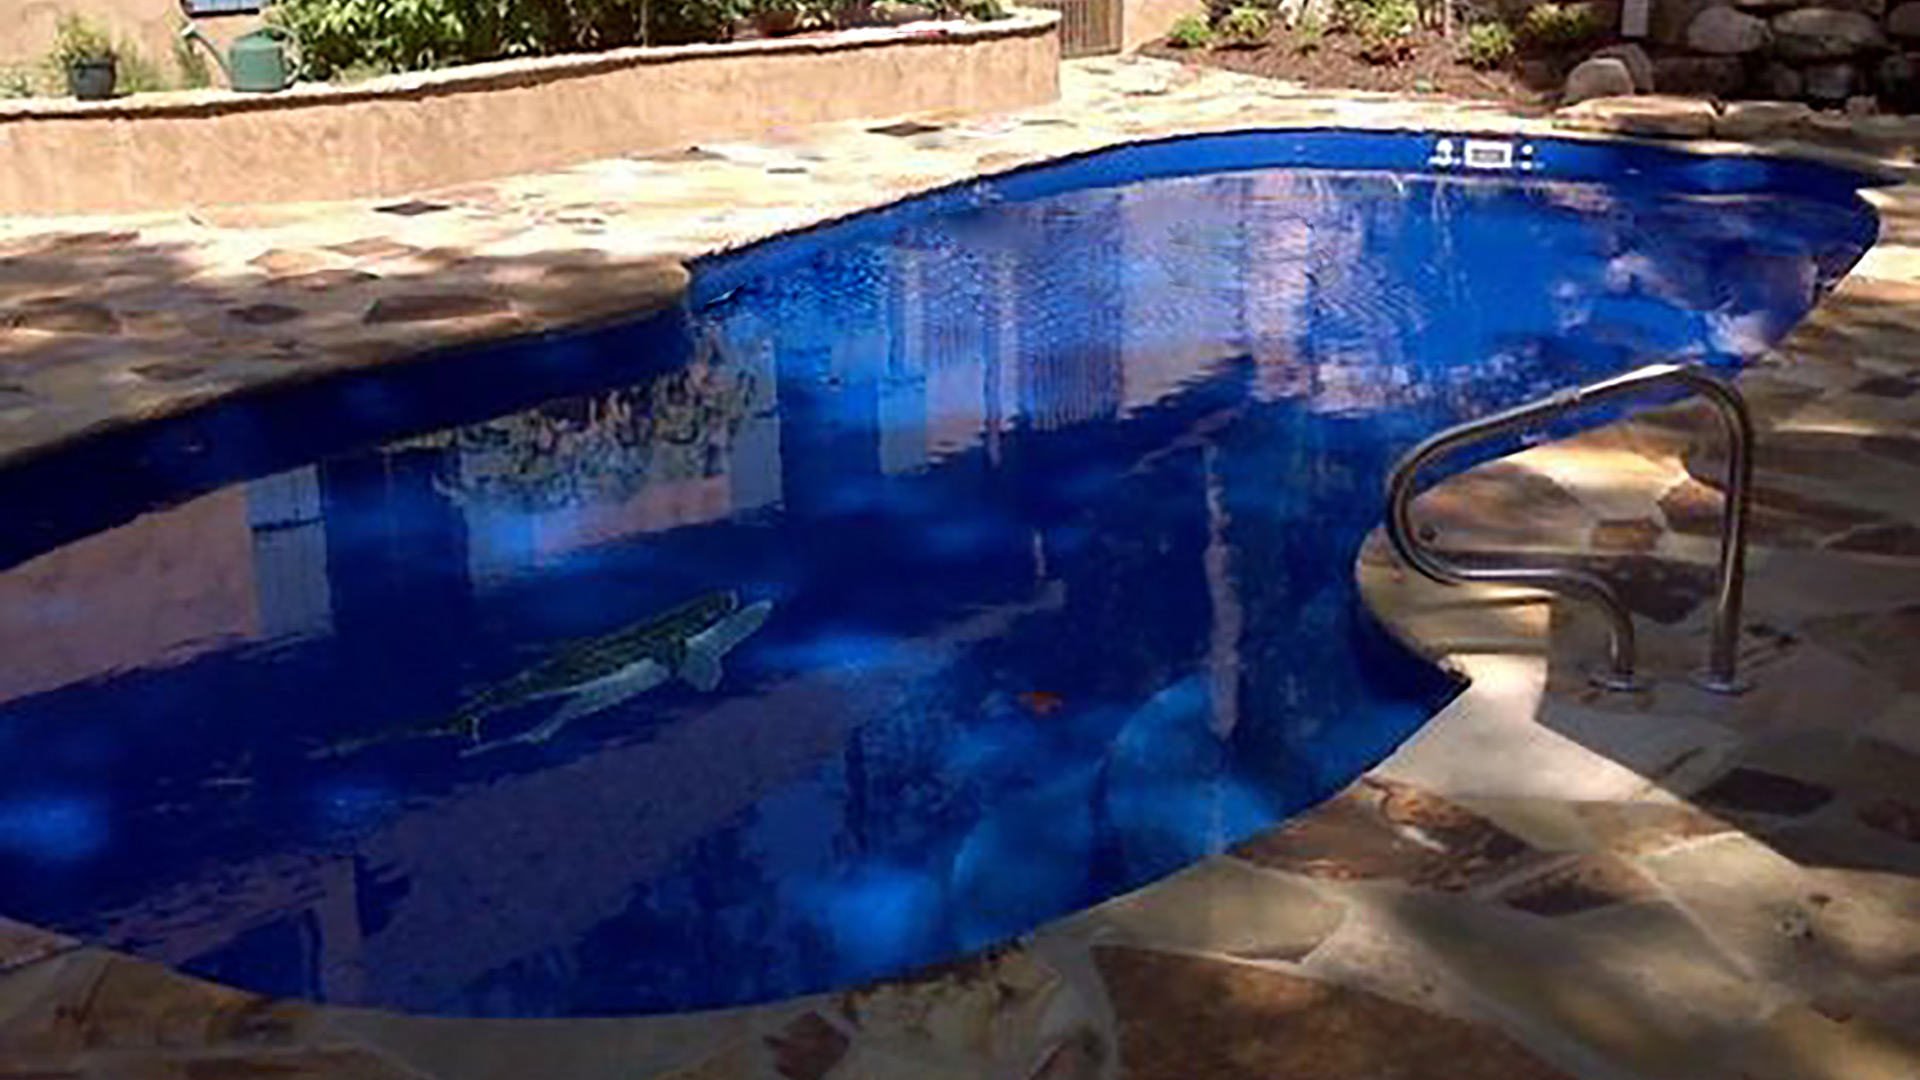 Alaglas Pools' Grand Baron, a large, freeform fiberglass pool in sapphire blue